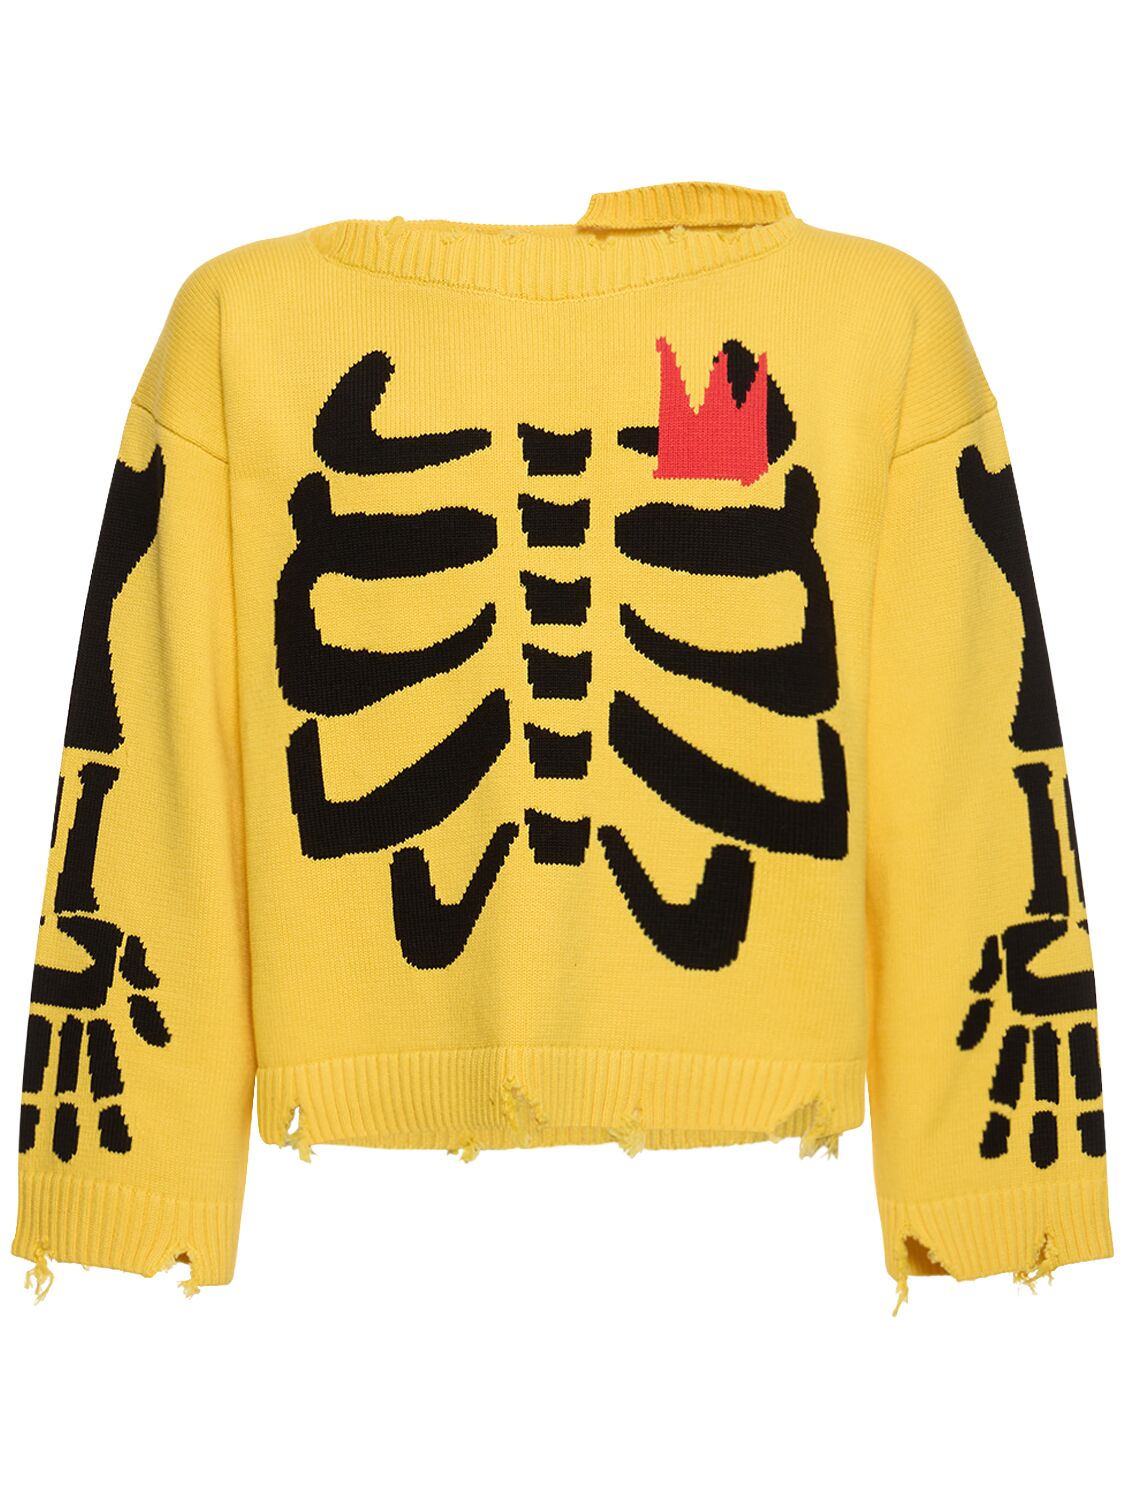 Image of Graphic Slash Skeleton Sweater